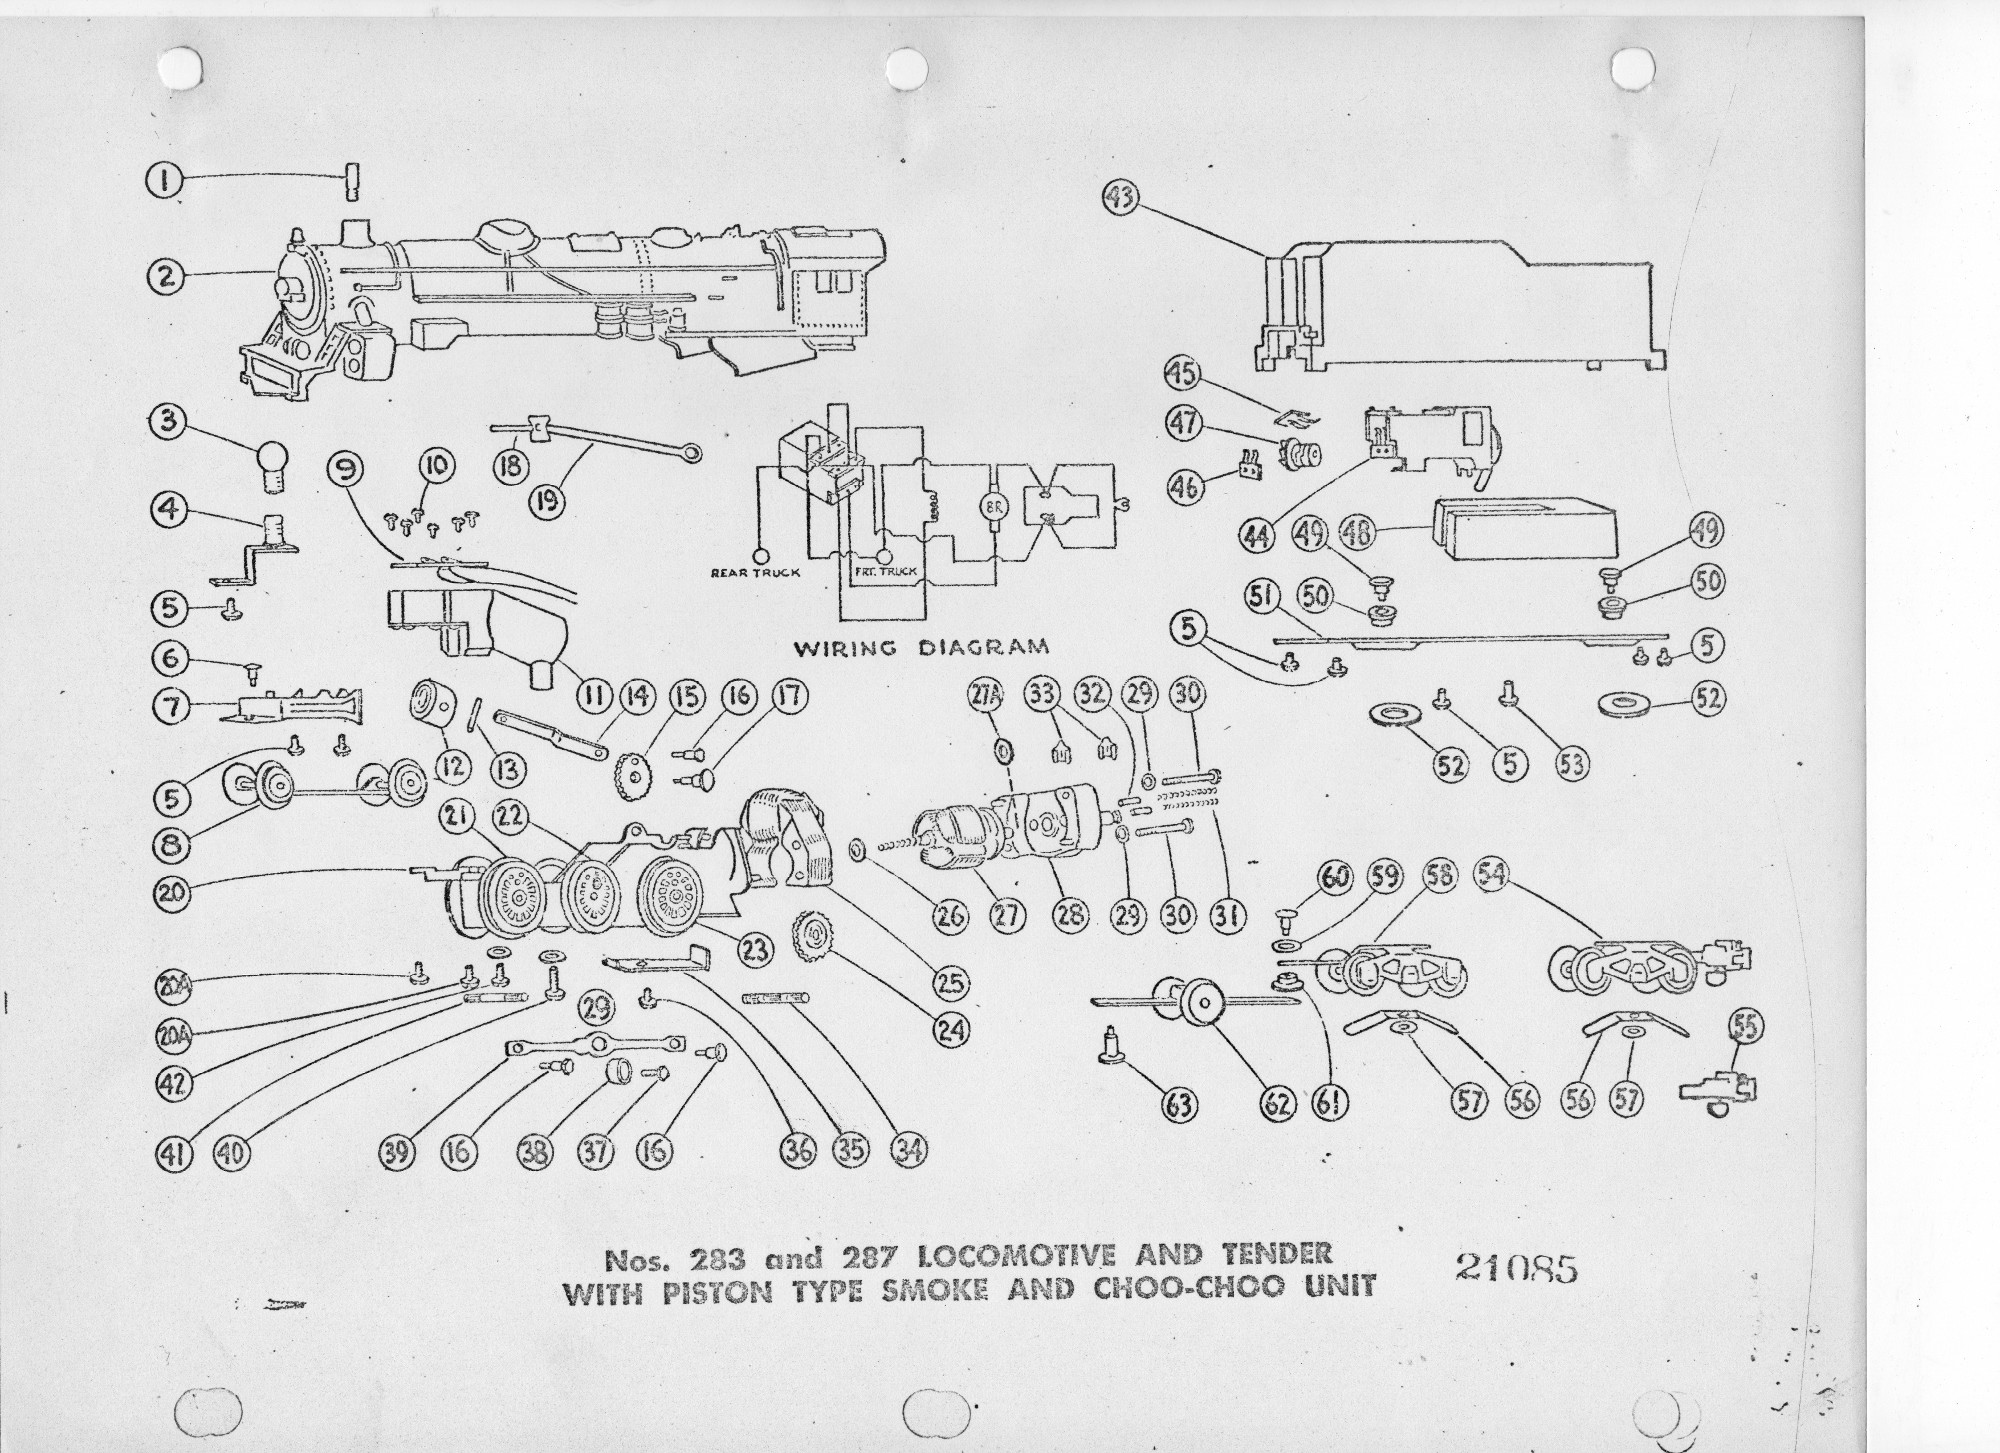 American Flyer Locomotive 283 & 287 Parts List and Diagram - Page 2